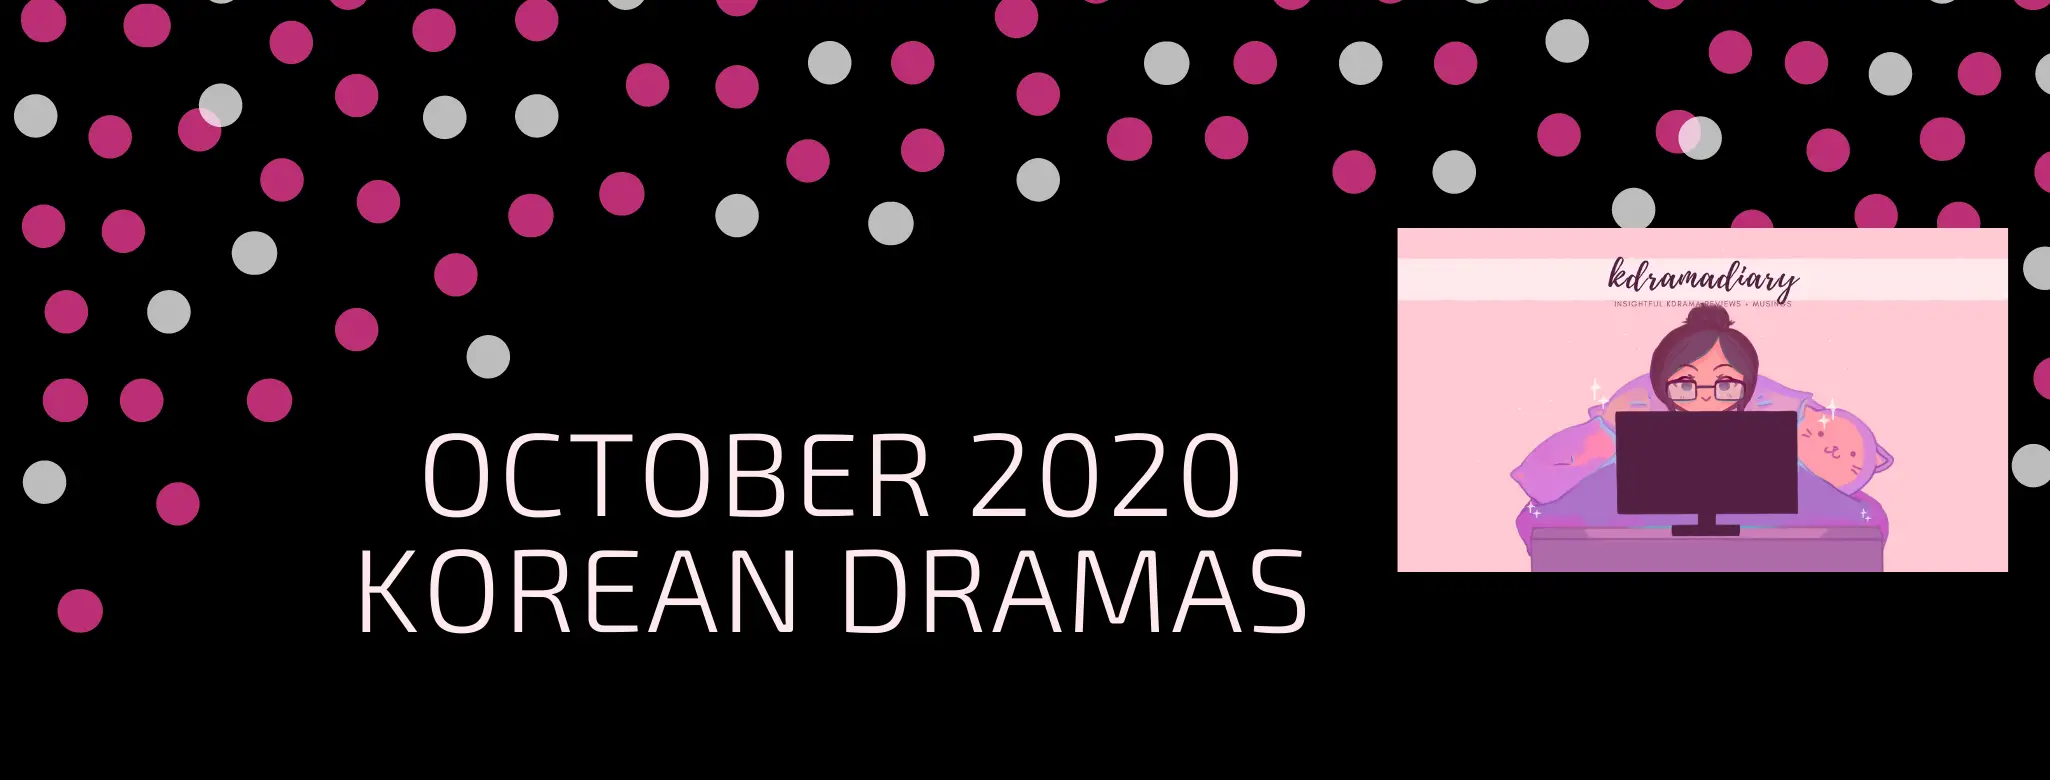 October 2020 Korean Dramas